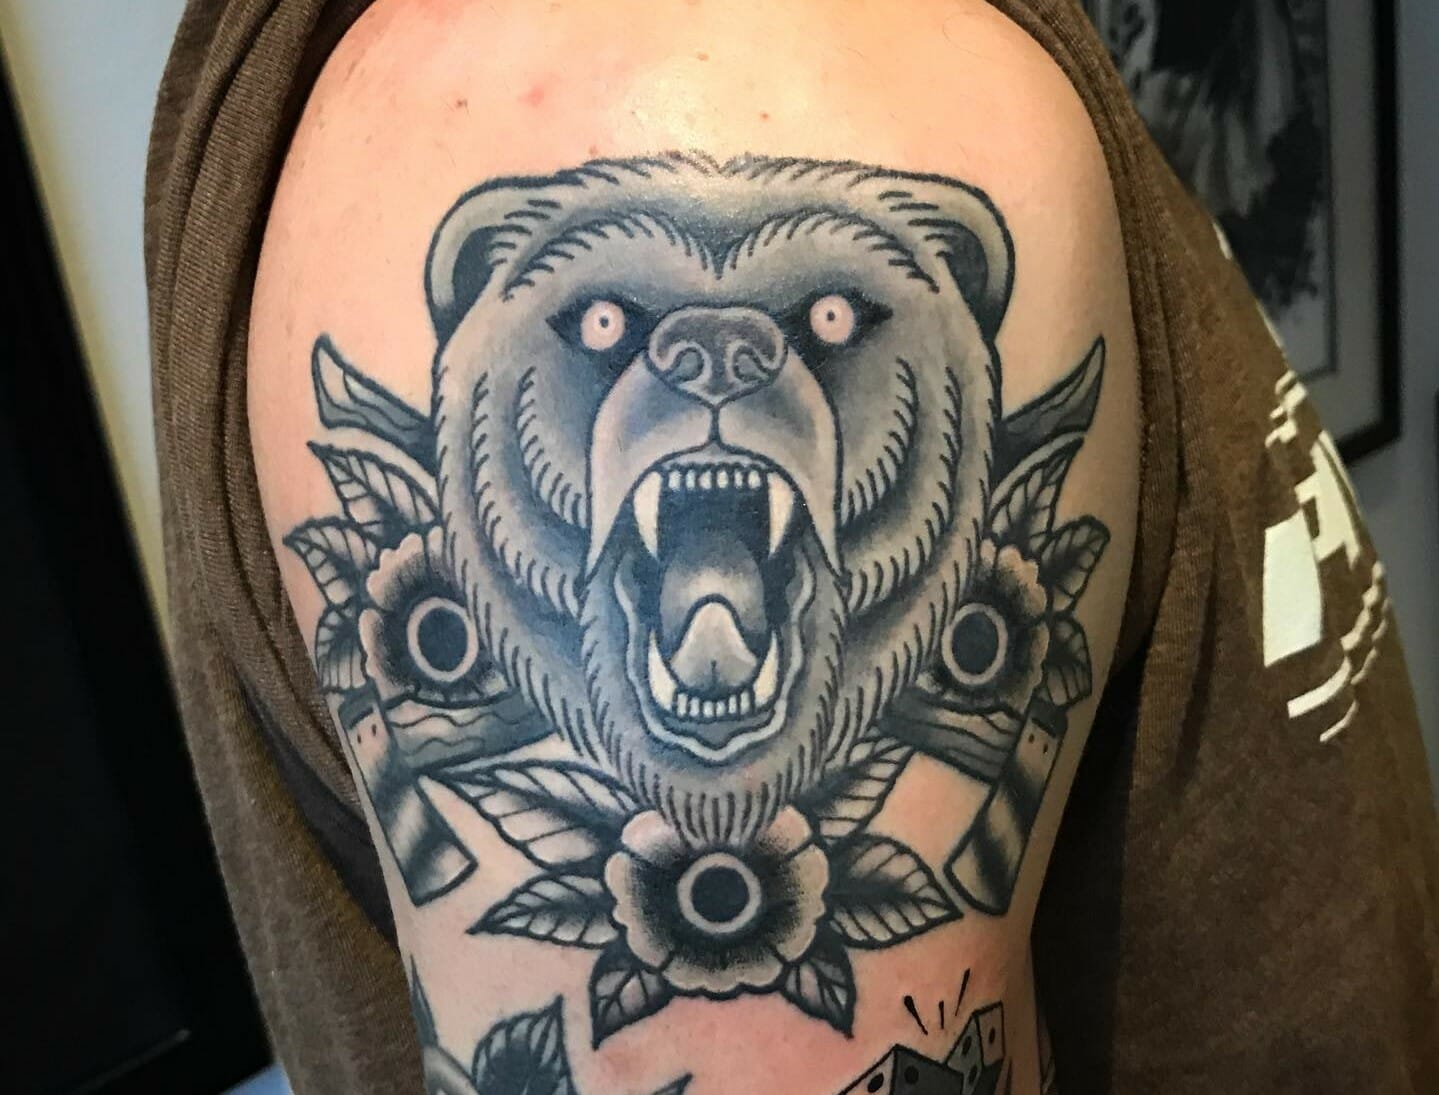 Bear tattoo a symbol of strength and protection   Онлайн блог о тату  IdeasTattoo